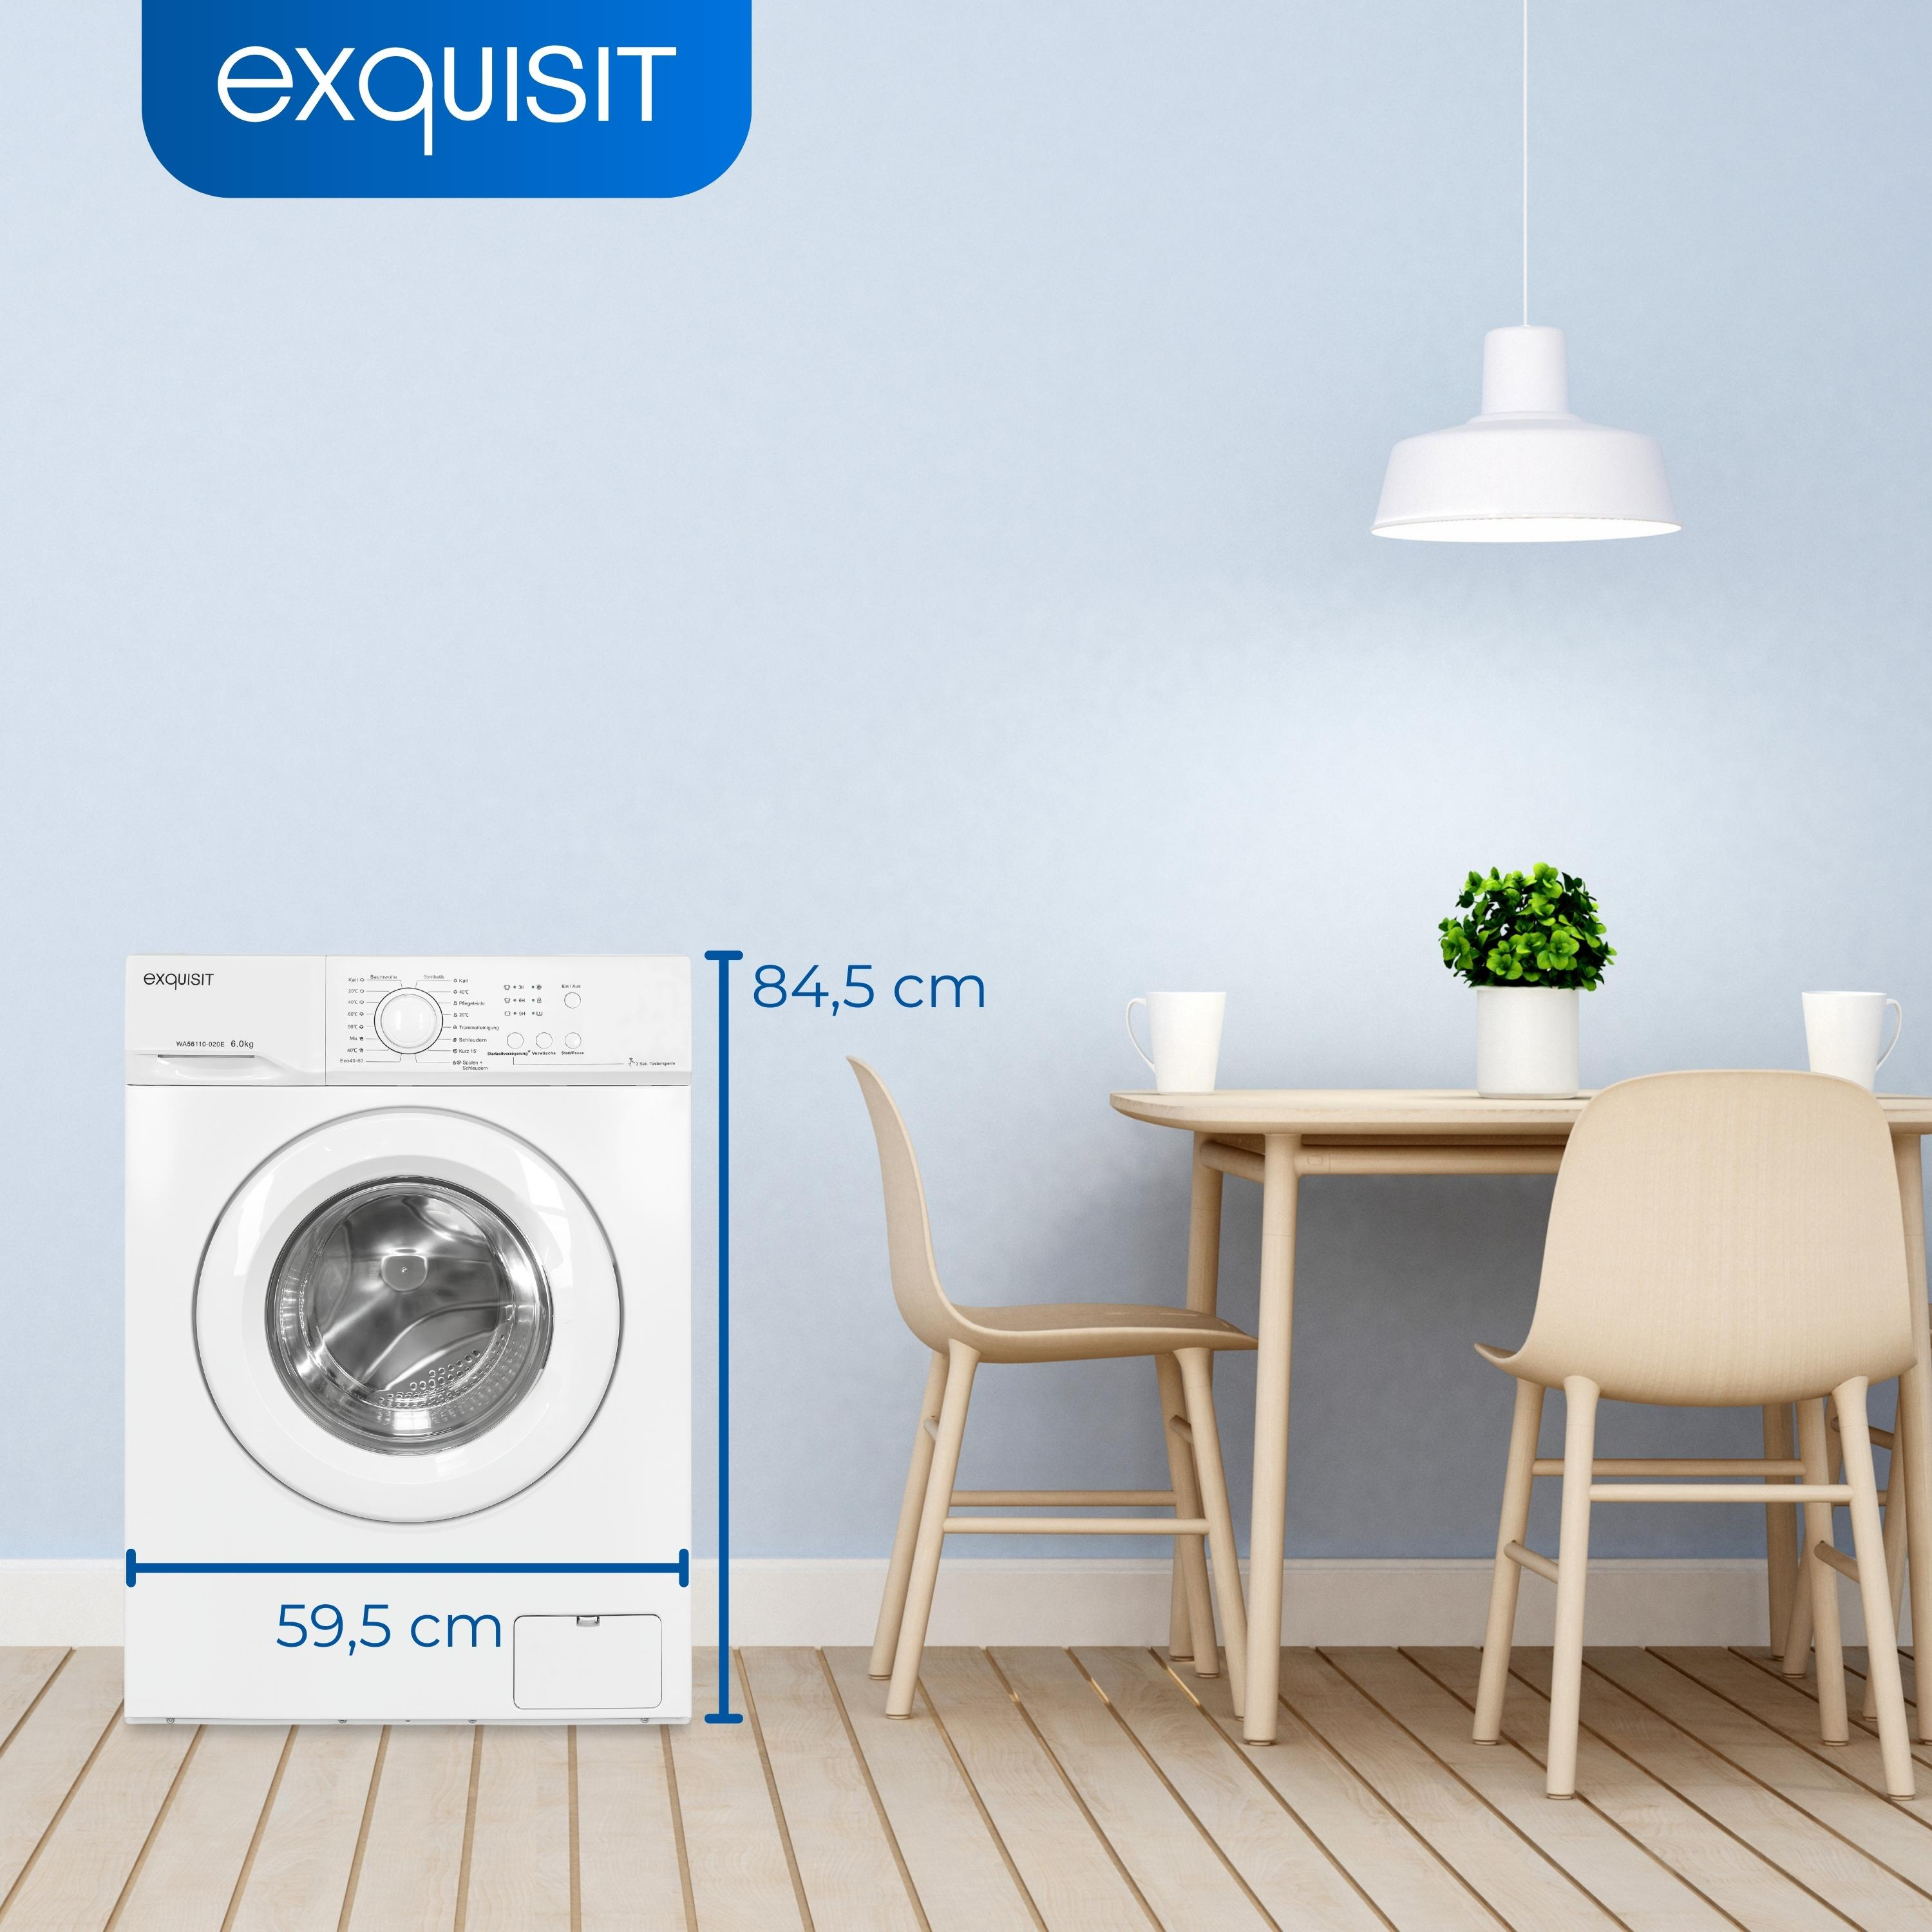 EXQUISIT Waschmaschine (6,0 kg, E) WA56110-020E